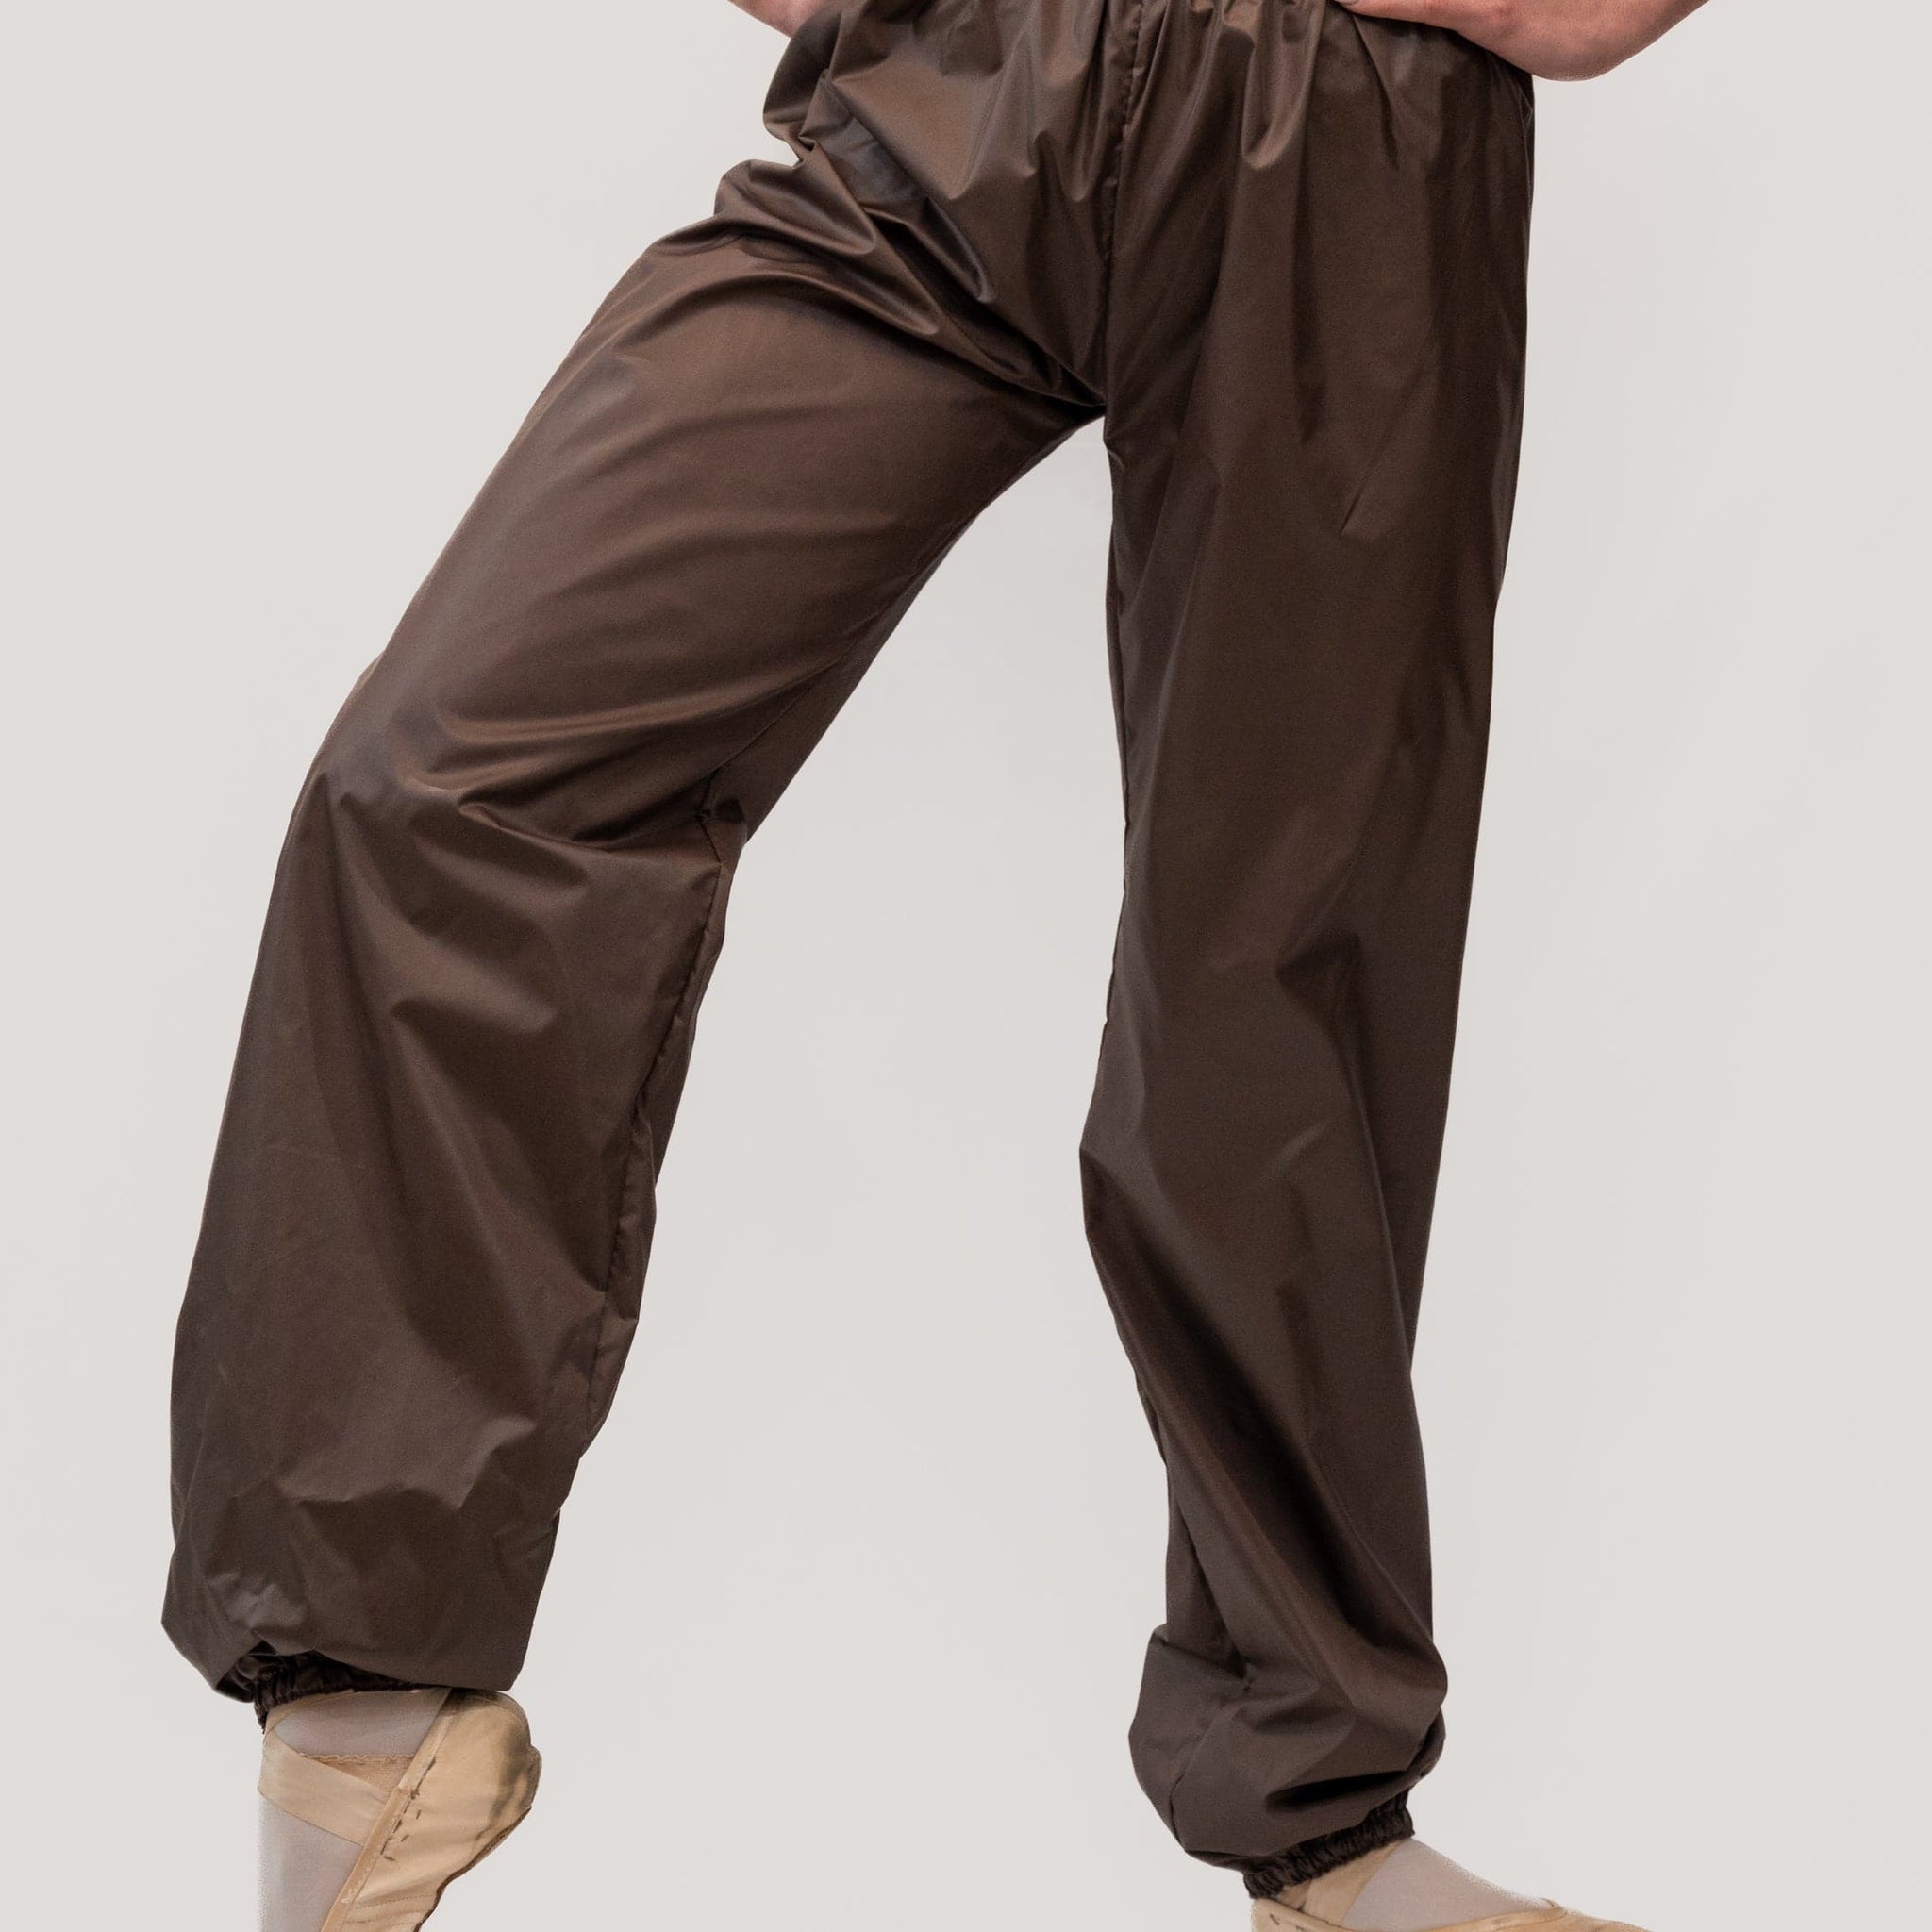 Lanzarote Warm-up Dance Trash Bag Pants MP5003 for Women and Men by Atelier della Danza MP